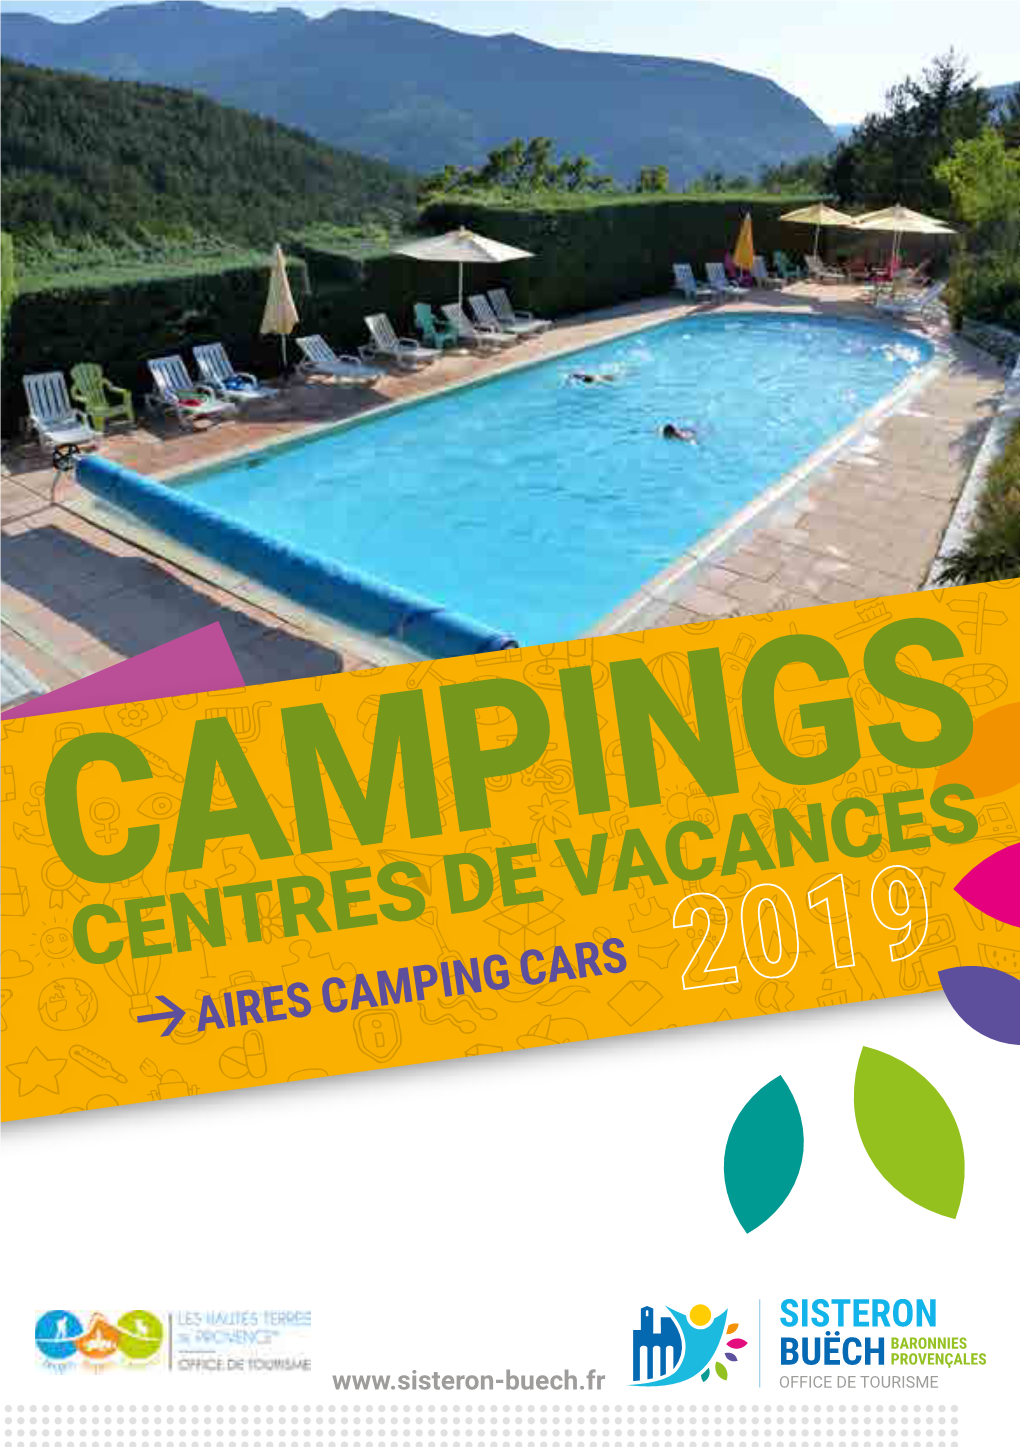 Centres De Vacances Aires Camping Cars